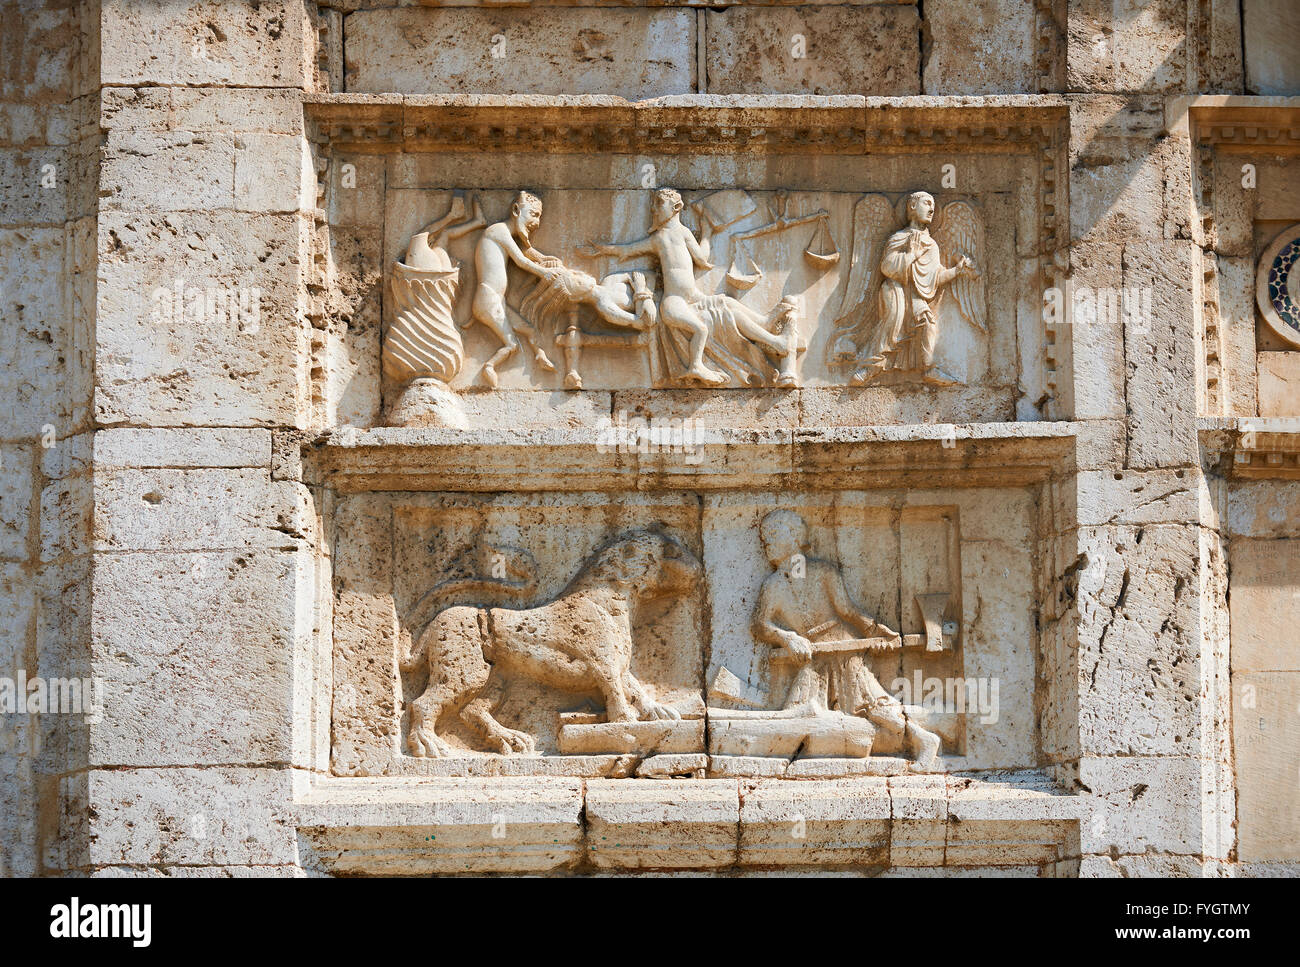 Sculpture of the Last Judgement, doom day, 12th century Romanesque facade of the Chiesa di San Pietro extra moenia , Spoleto Stock Photo